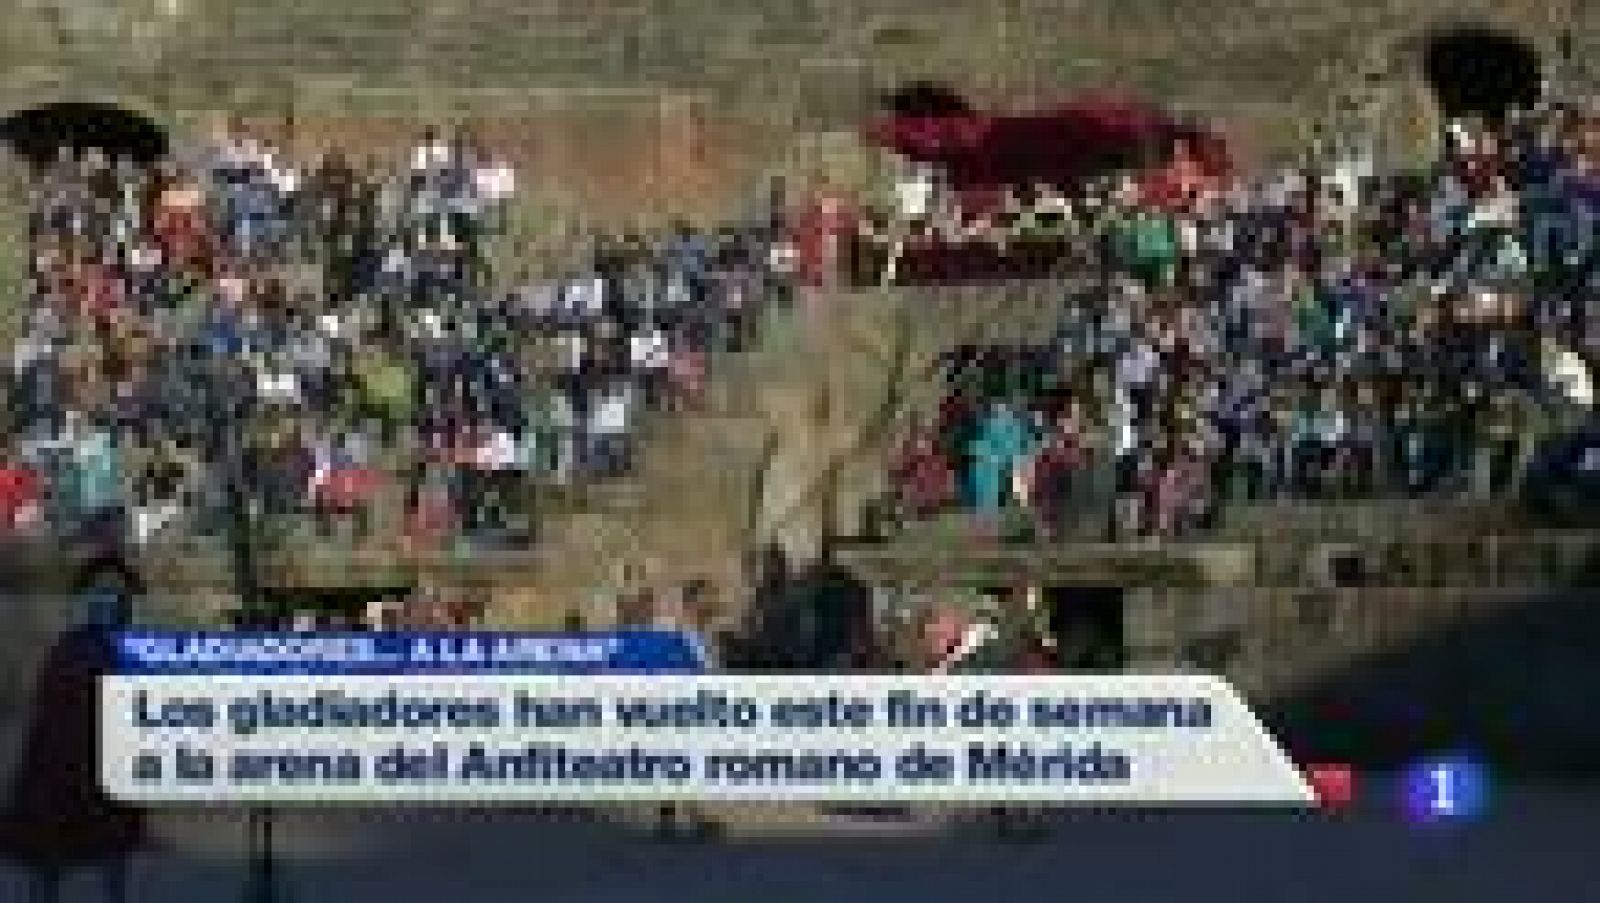 Noticias de Extremadura: Noticias de Extremadura - 07/04/14 | RTVE Play